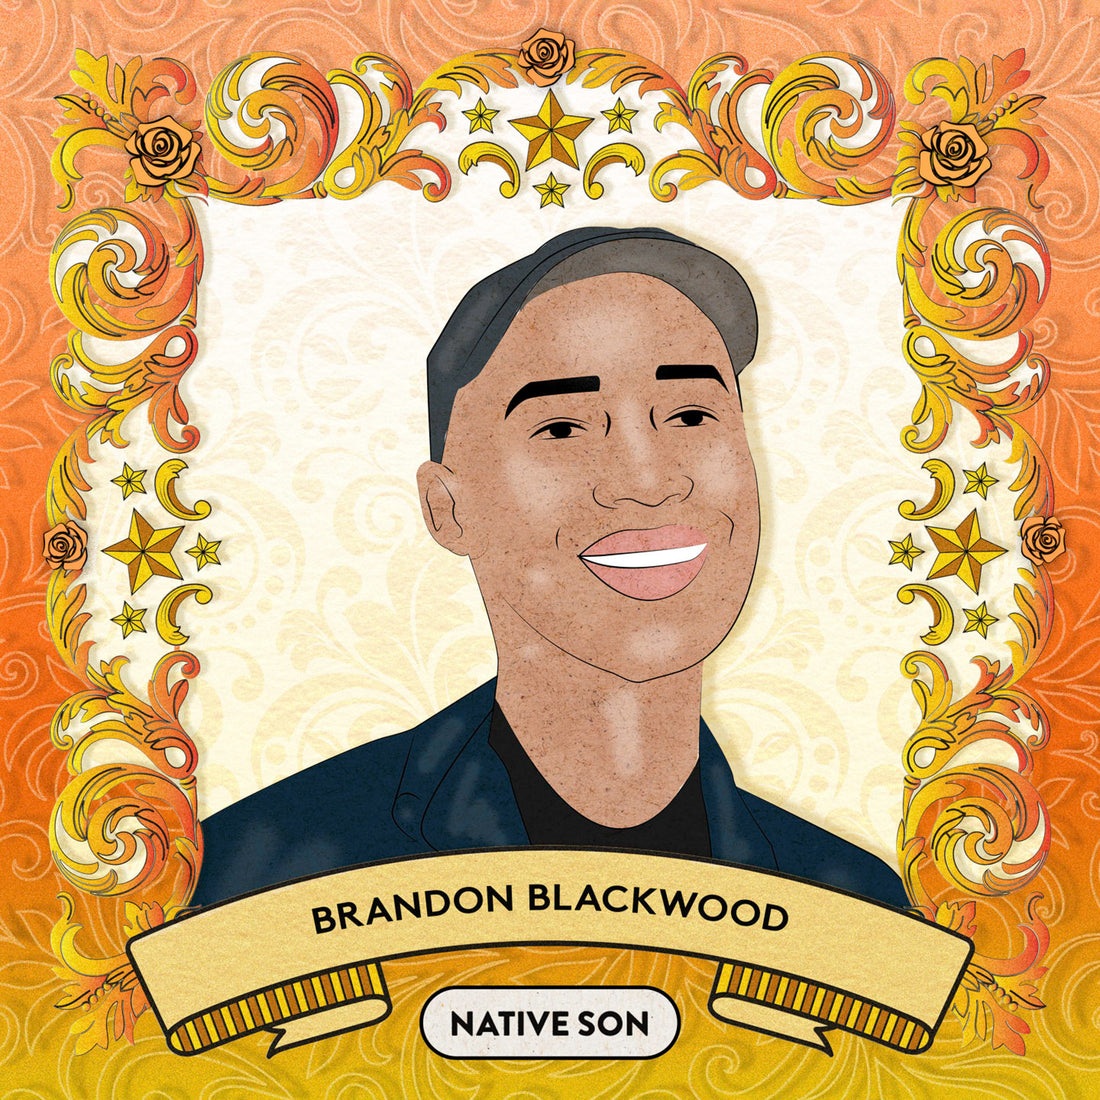 BRANDON BLACKWOOD